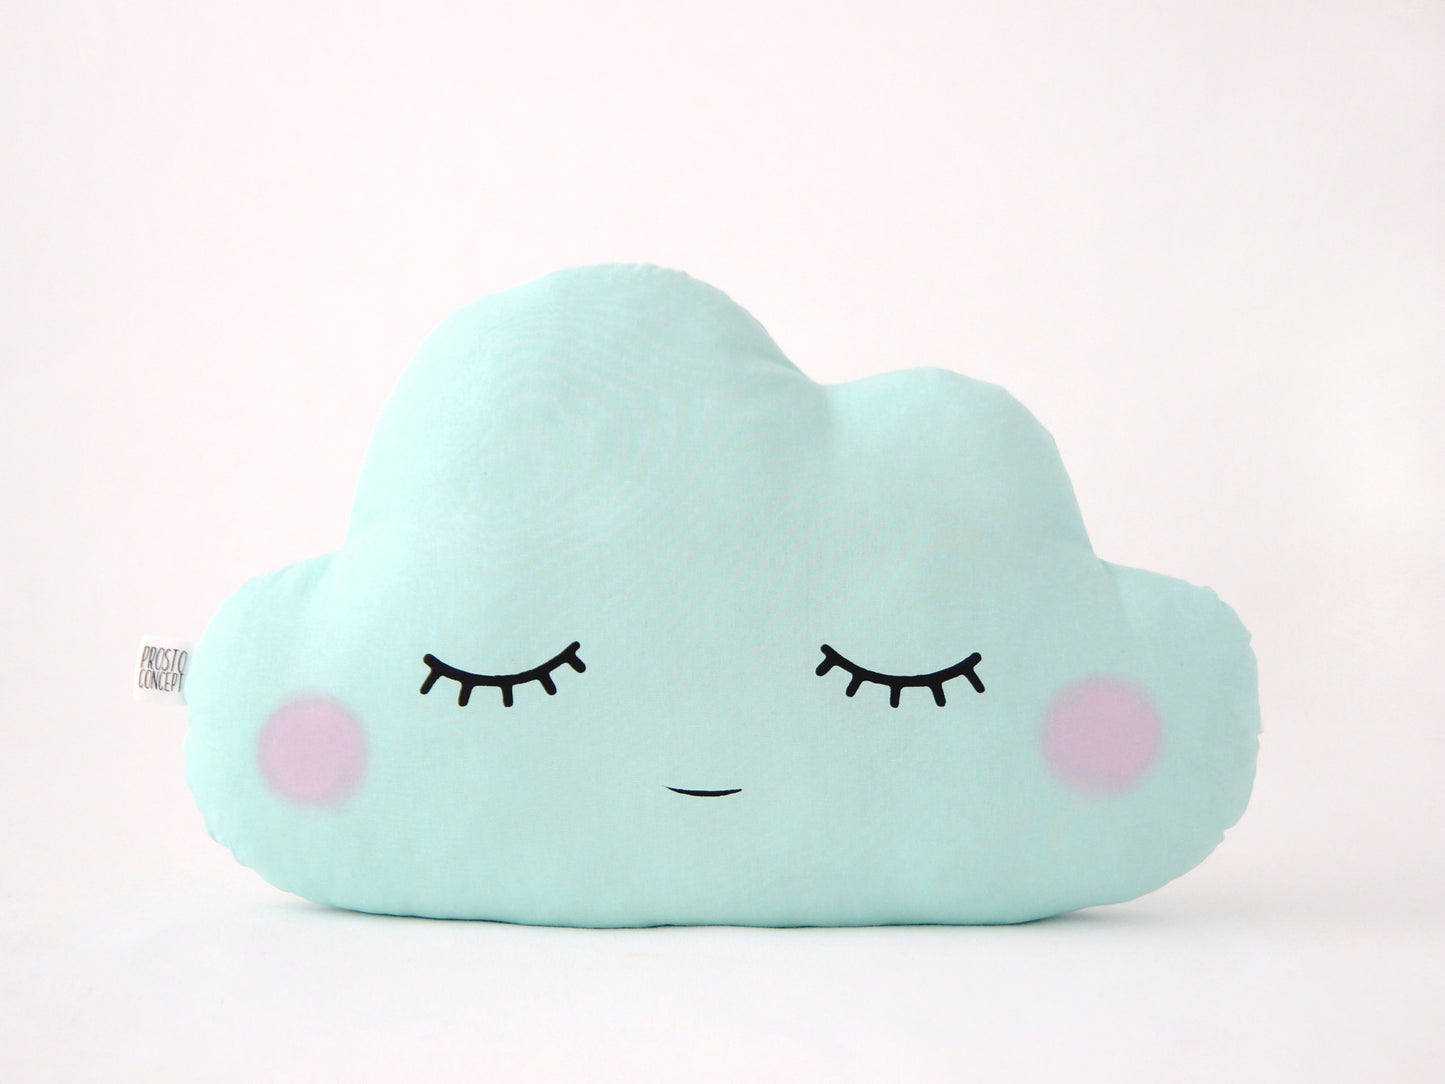 Mint Cloud Pillow